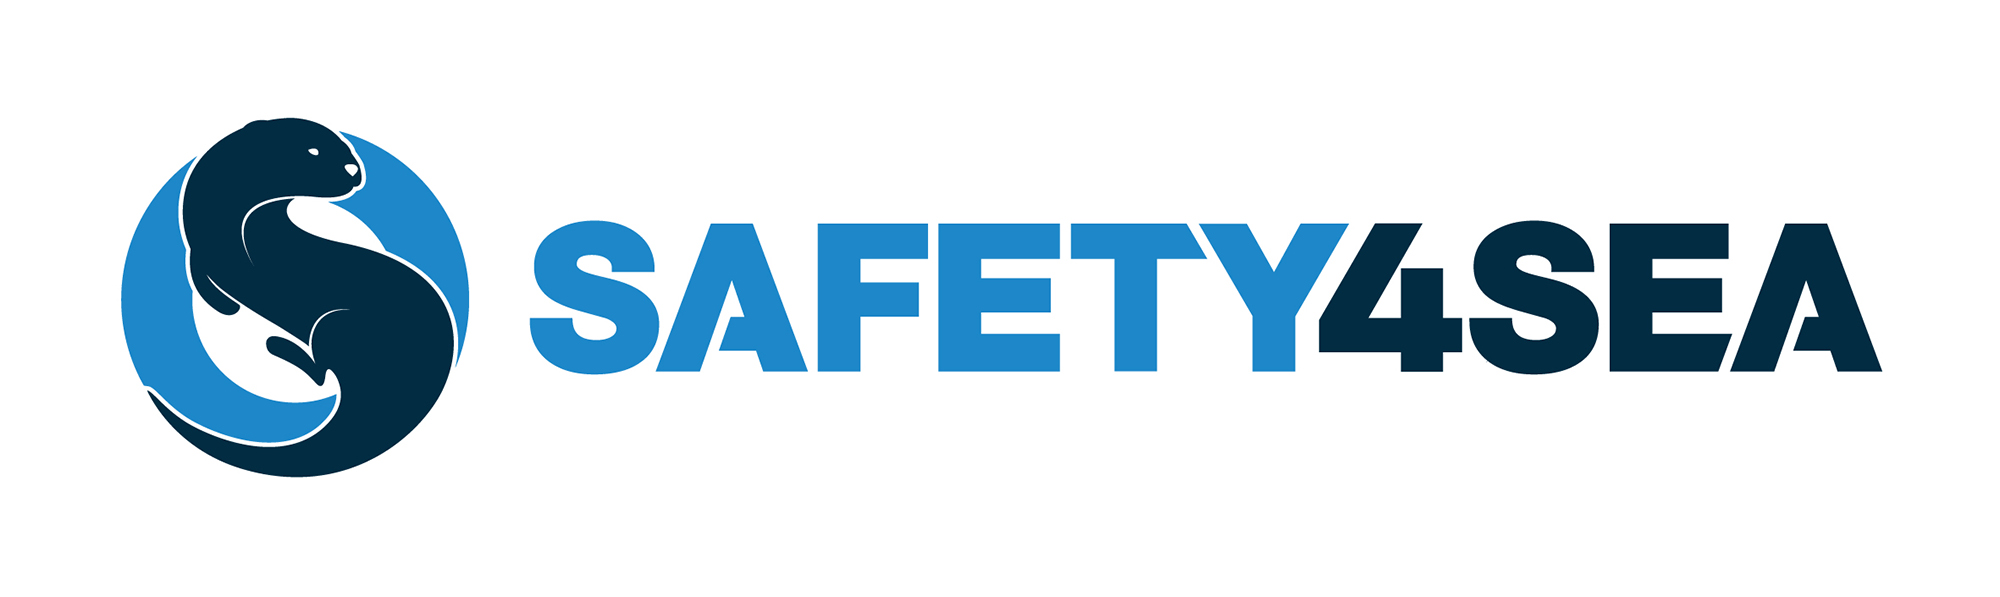 Safety4Sea